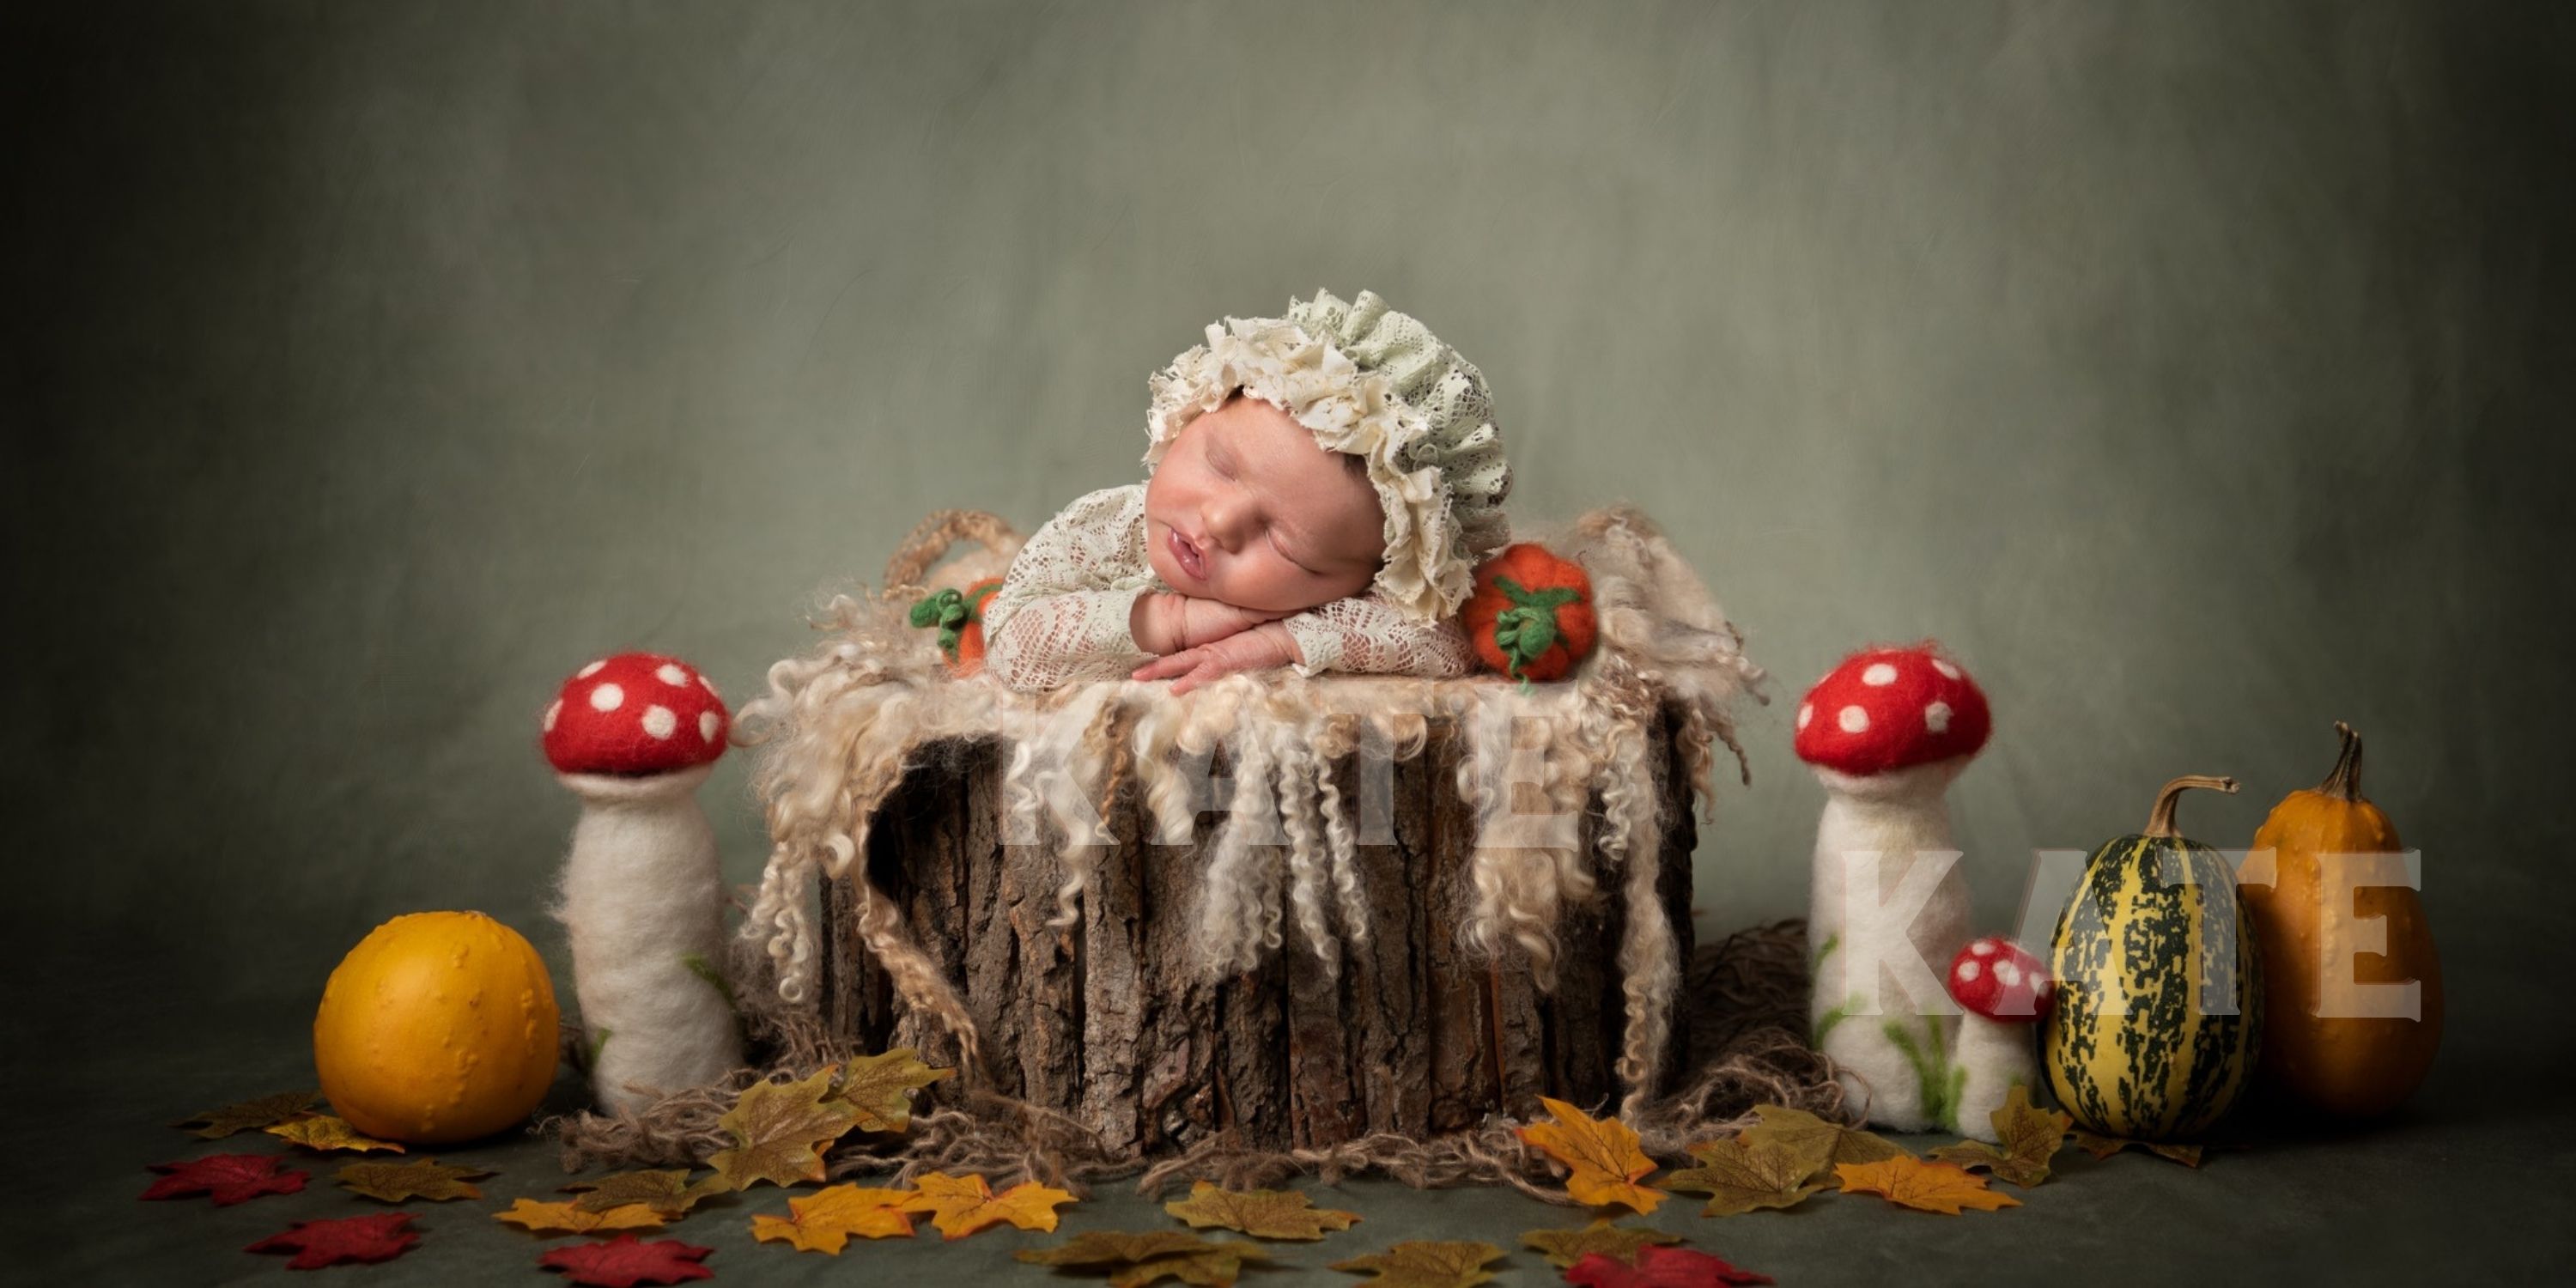 Expert Tips for Newborn Photography